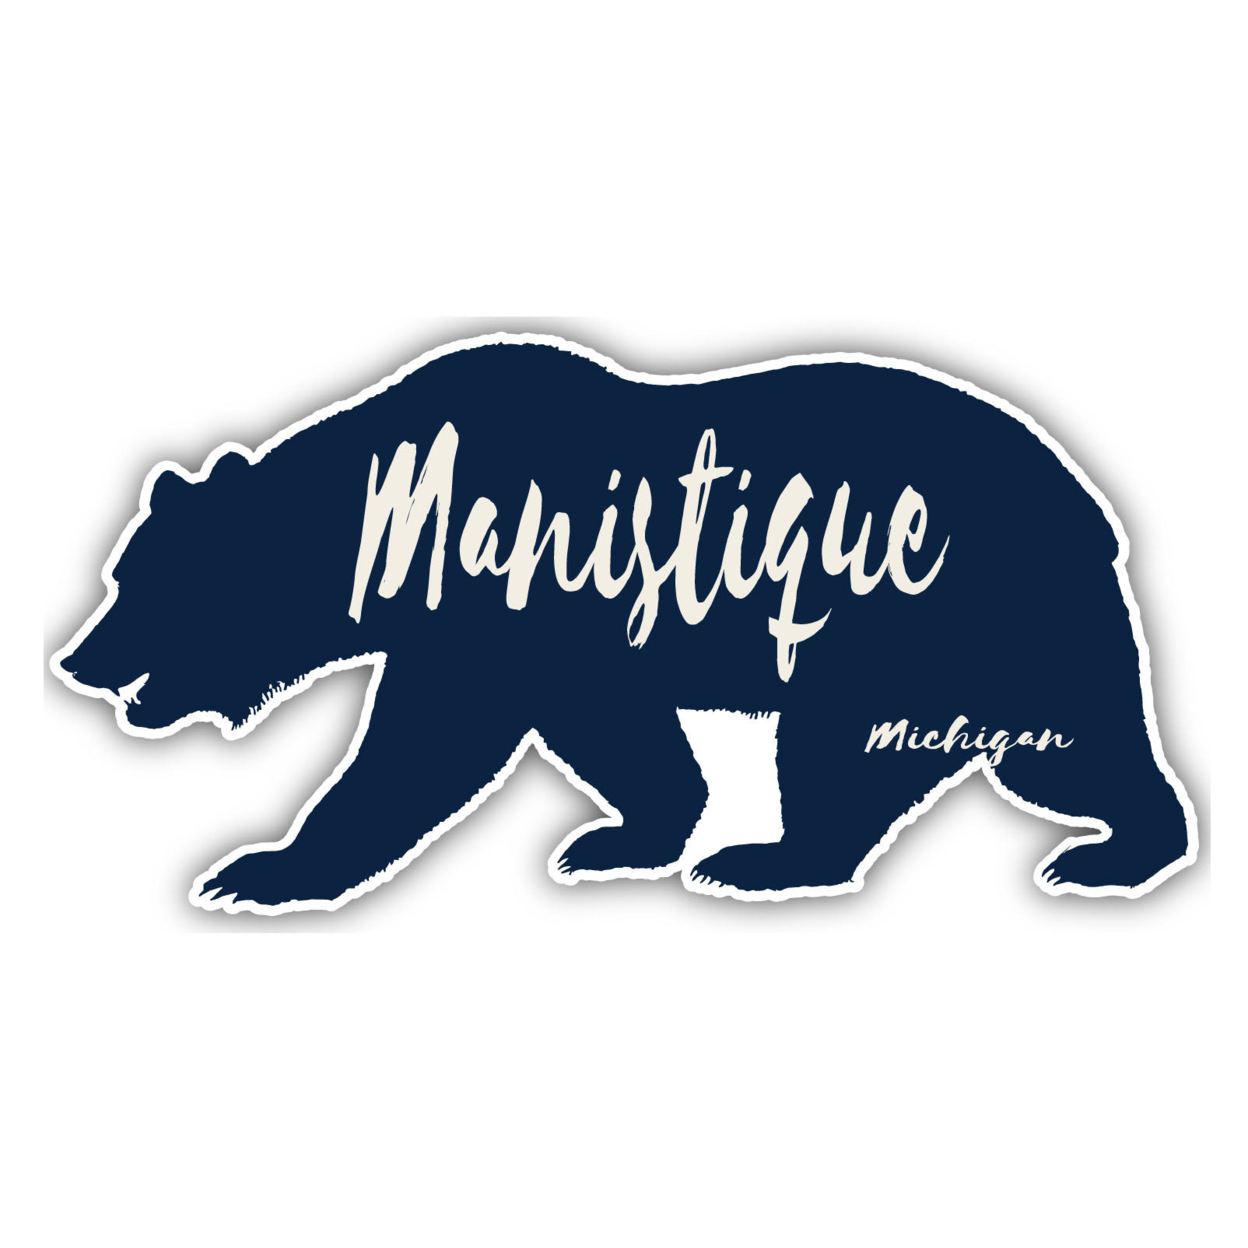 Manistique Michigan Souvenir Decorative Stickers (Choose Theme And Size) - 2-Inch, Bear